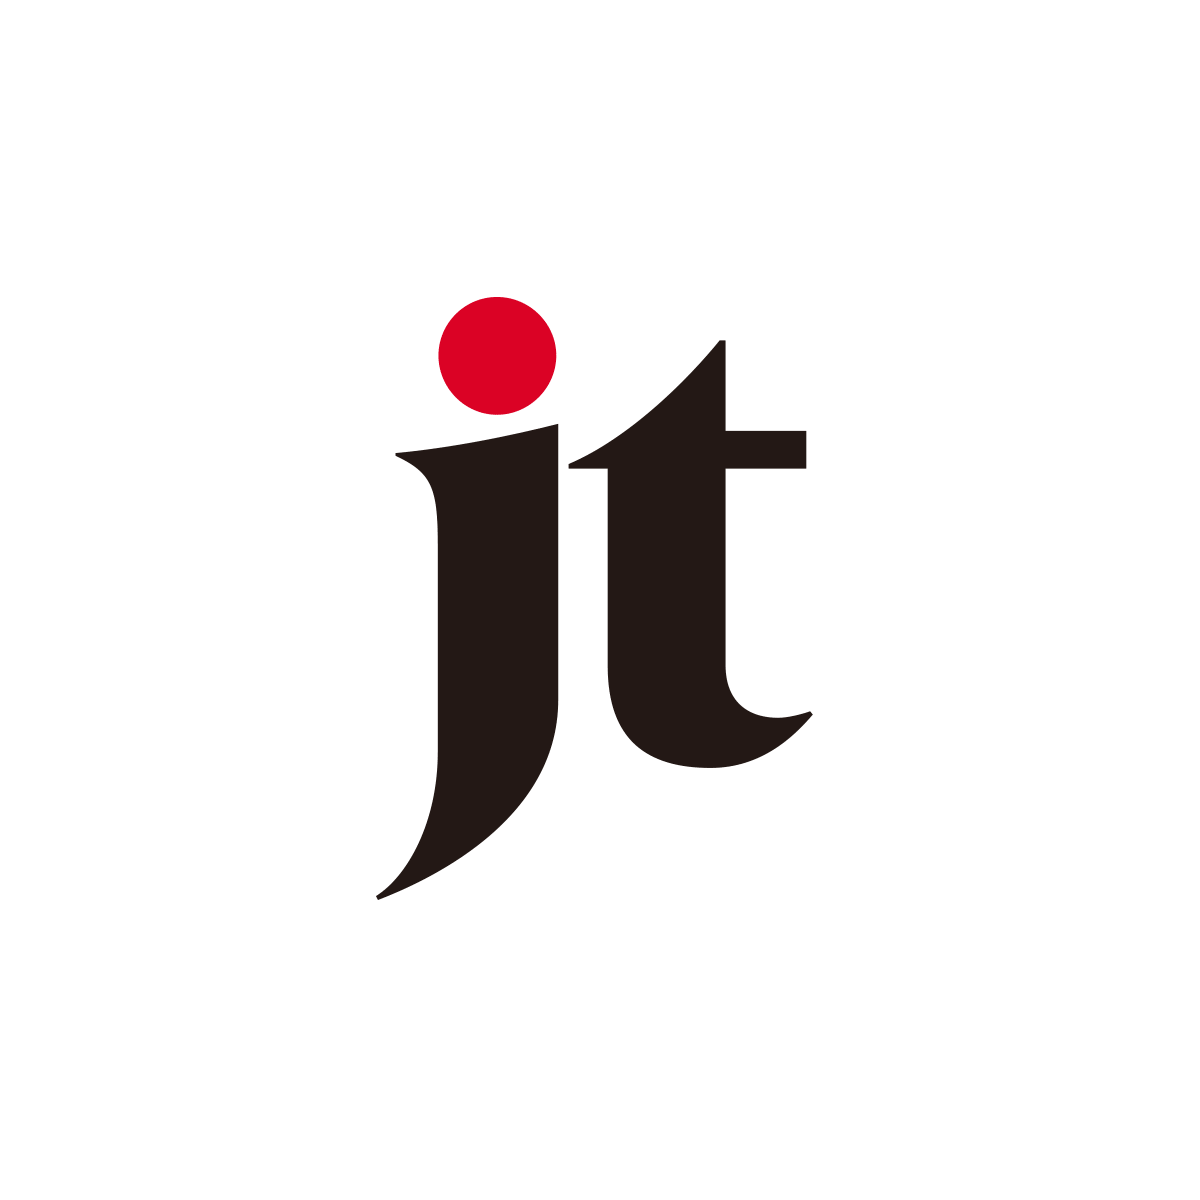 the argument: Fukushima water crisis - News - The Japan Times